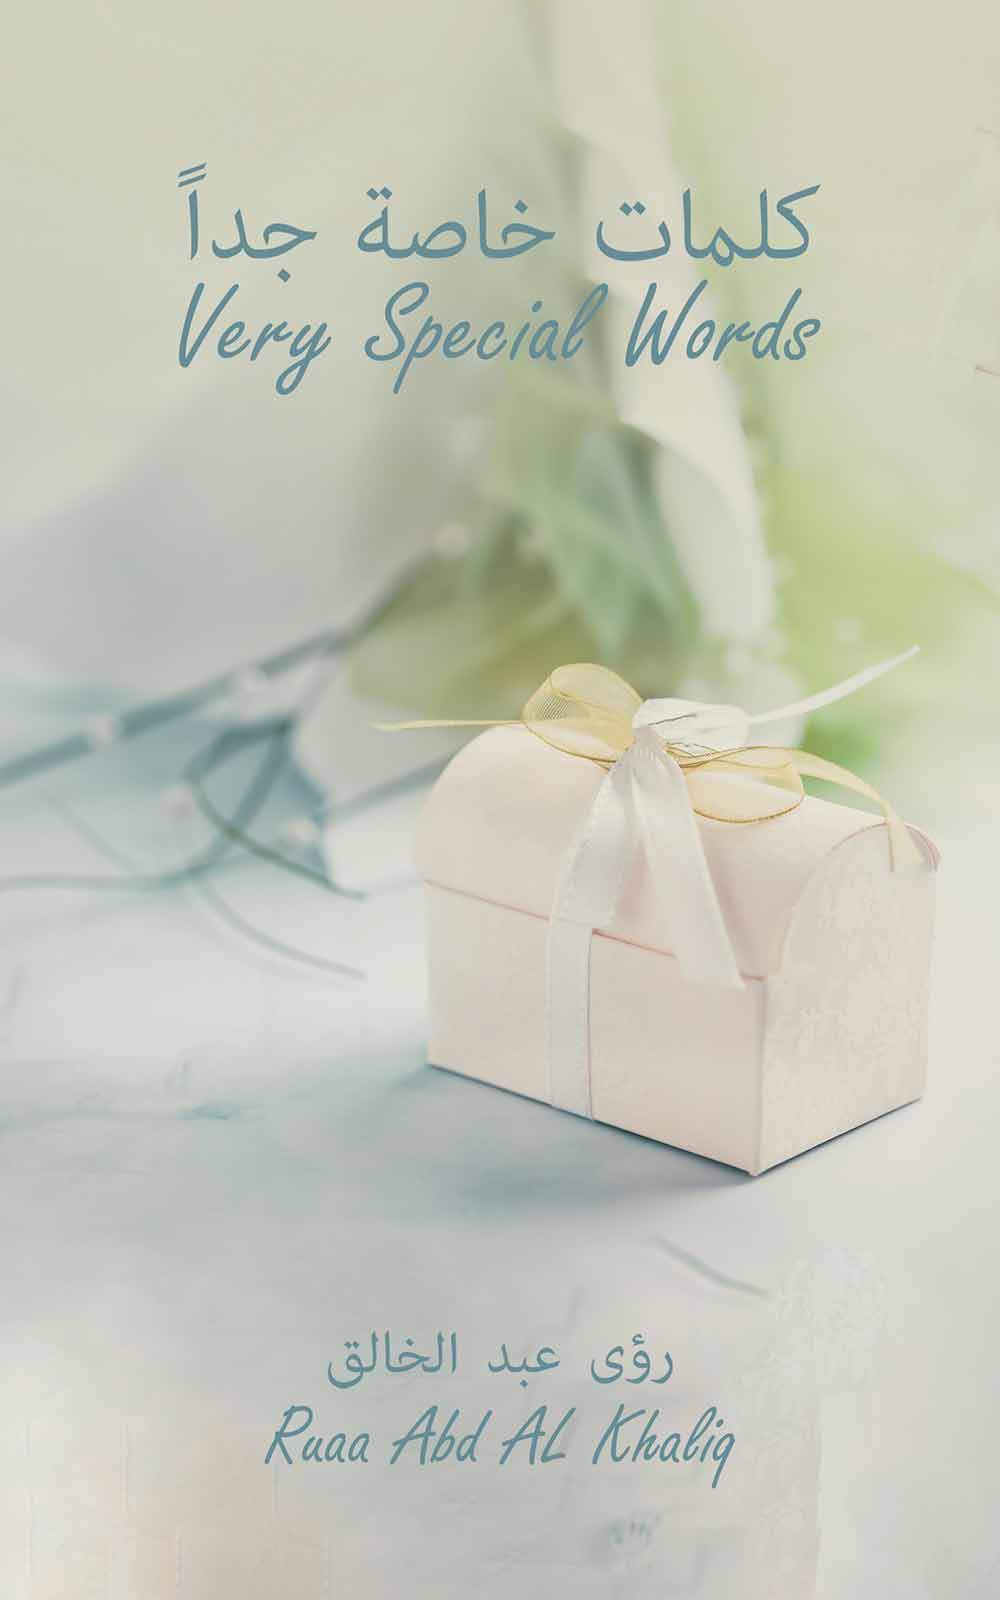 كلمات خاصة جداً - Very Special Words